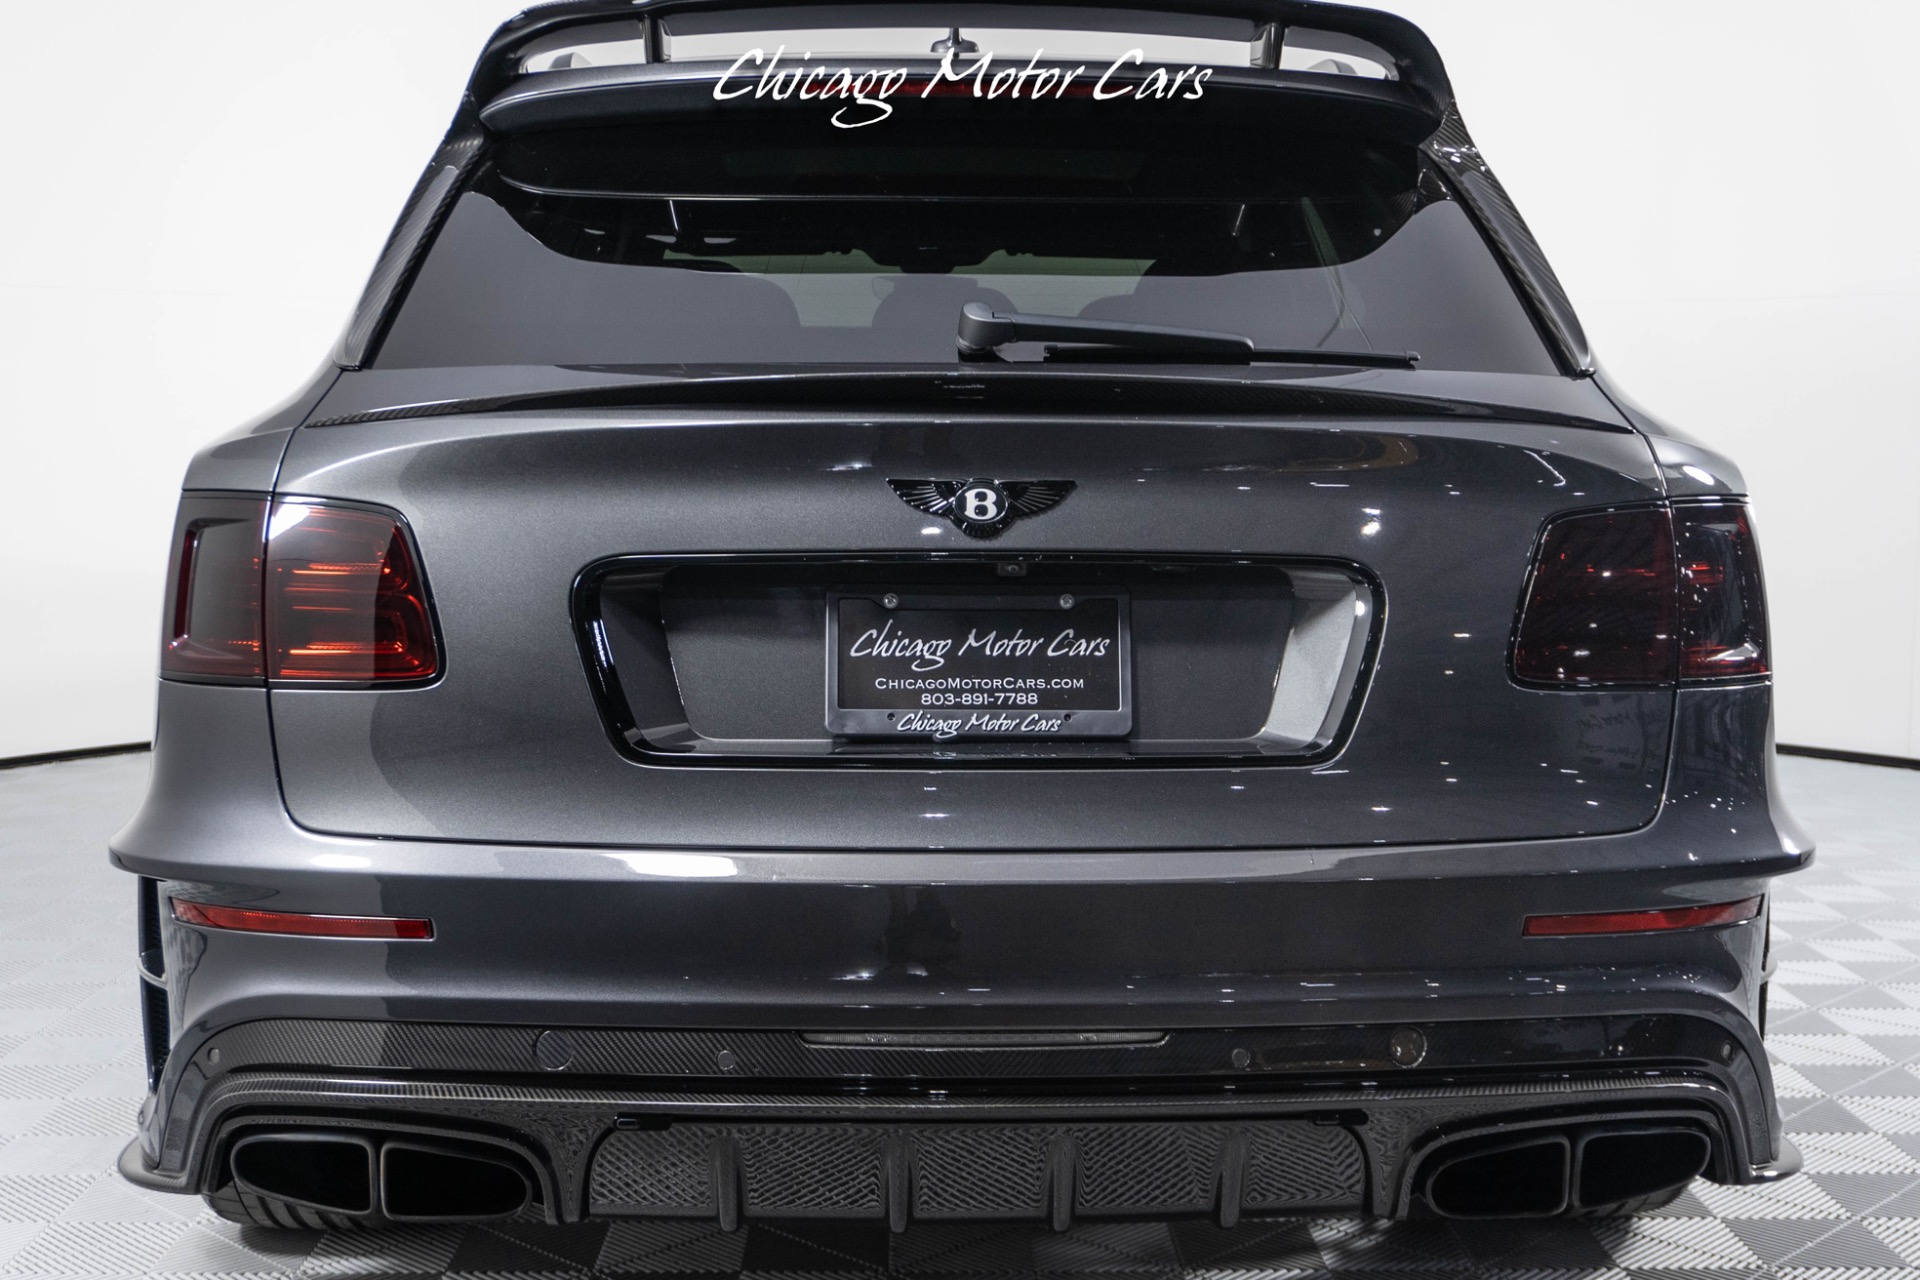 Used-2018-Bentley-Bentayga-MANSORY-EDITION-TONS-OF-CARBON-FIBER-HIGH-PERFORMANCE-LUXURY-SUV